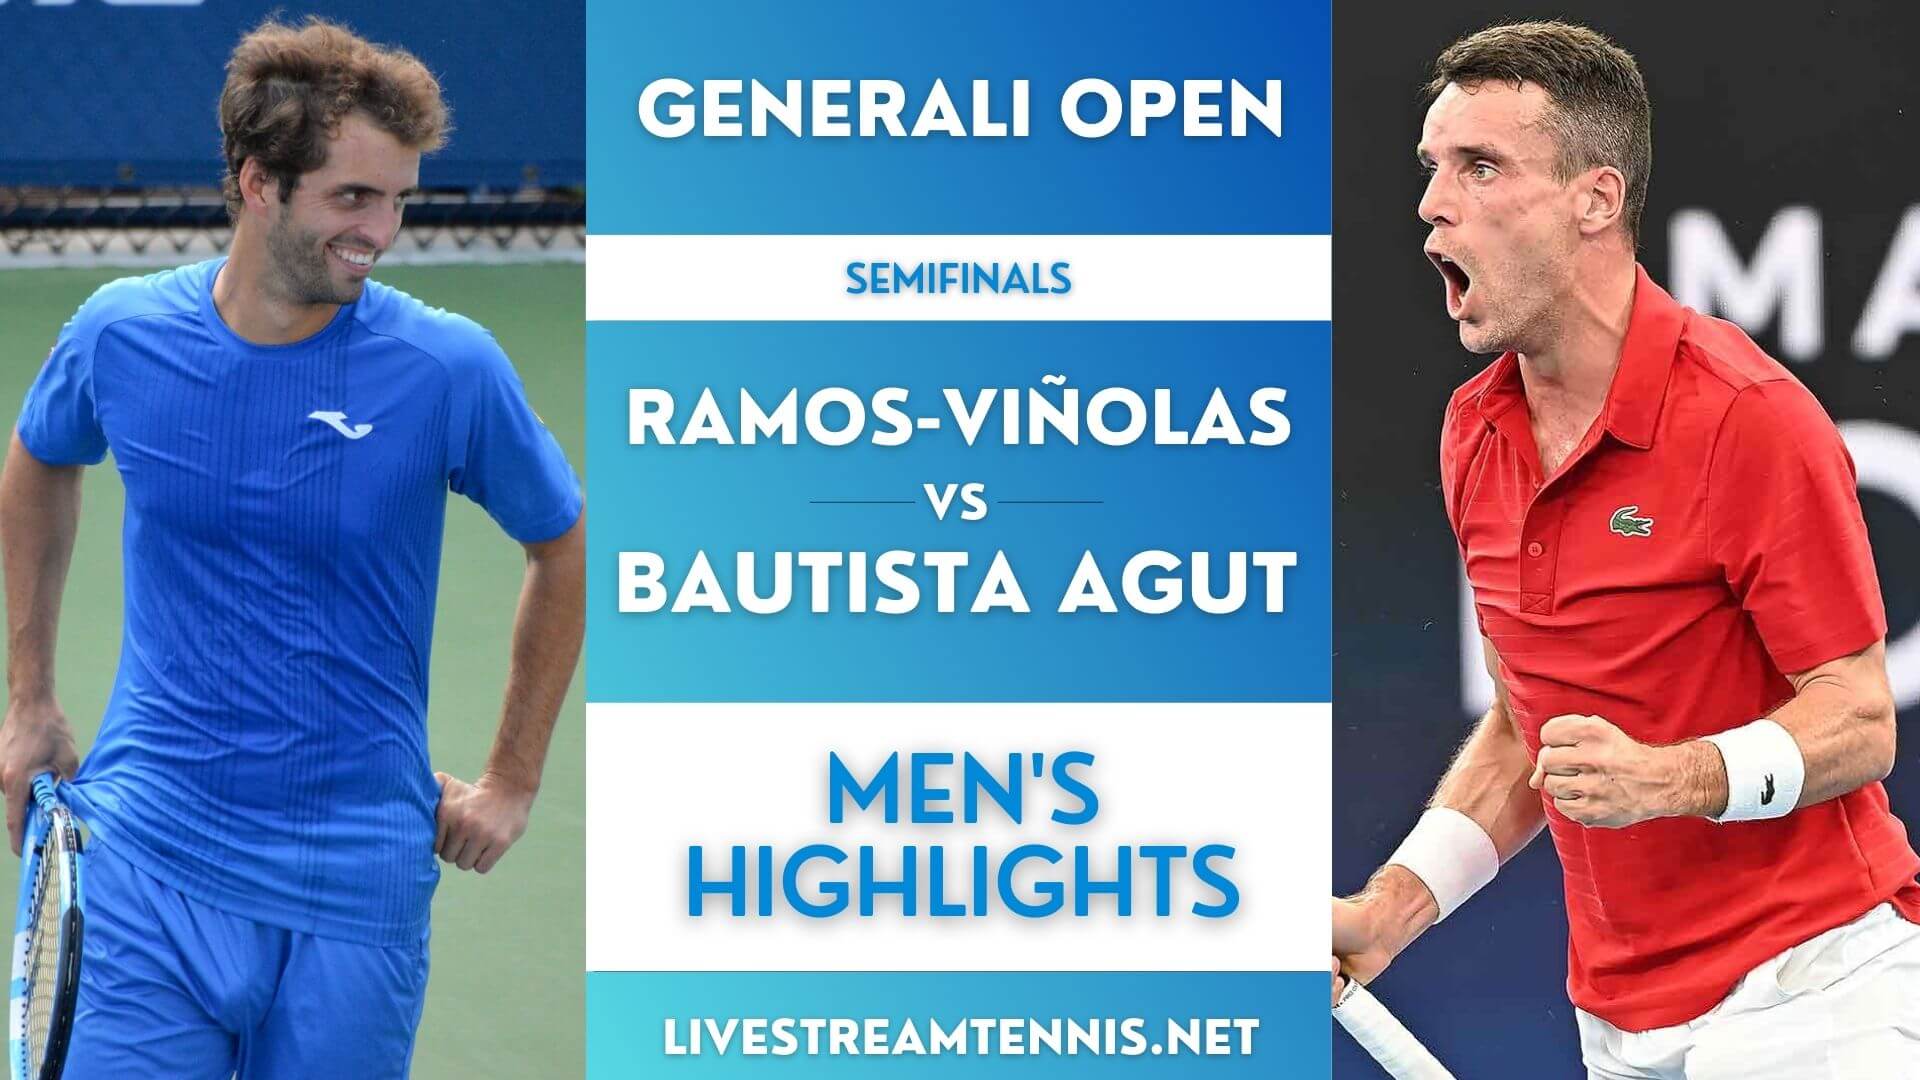 Generali Open ATP Semifinal 2 Highlights 2022